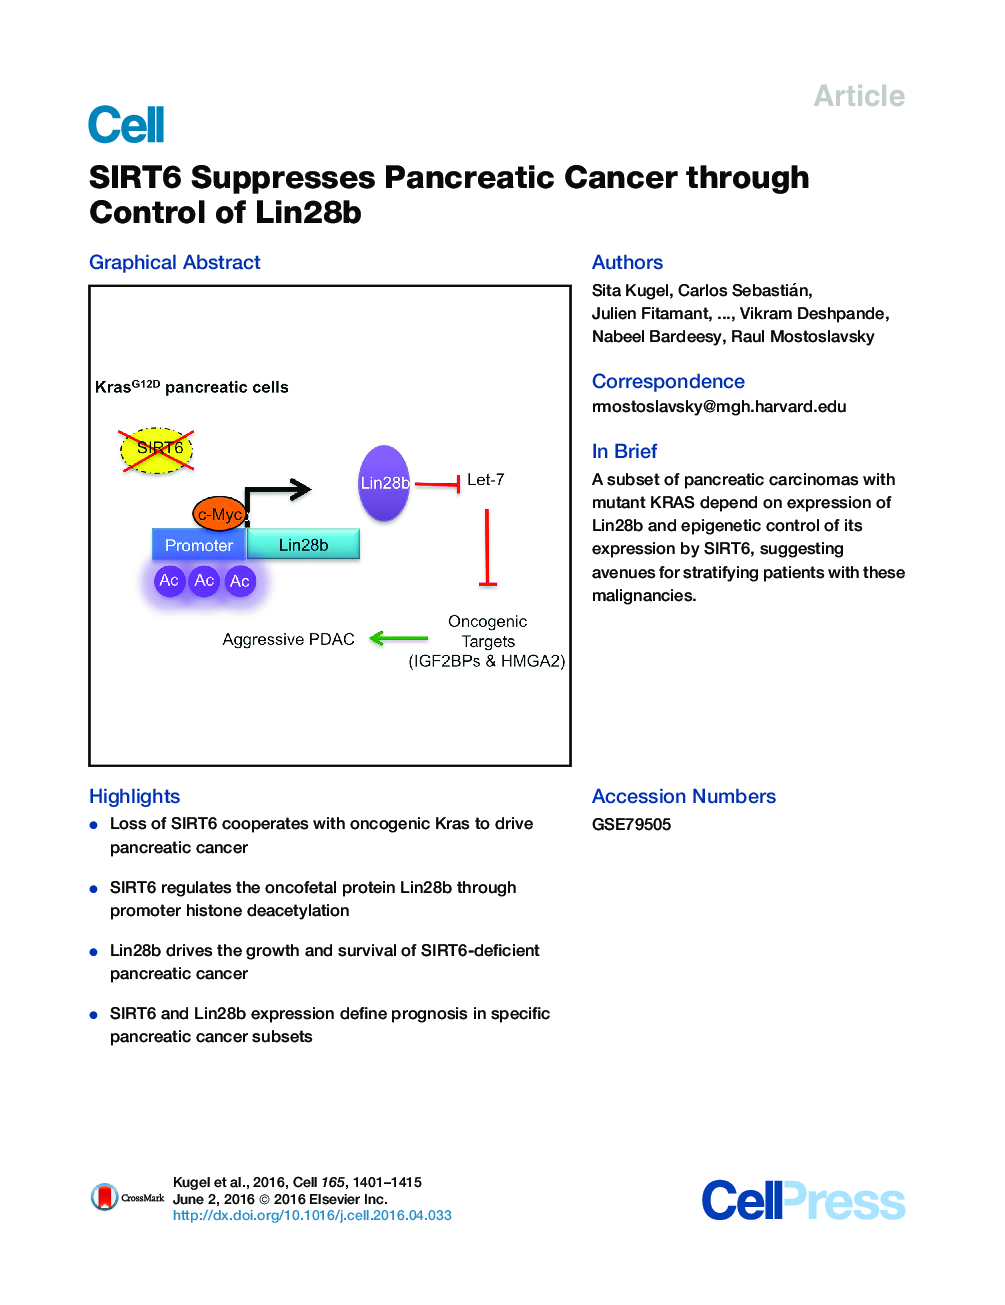 SIRT6 Suppresses Pancreatic Cancer through Control of Lin28b